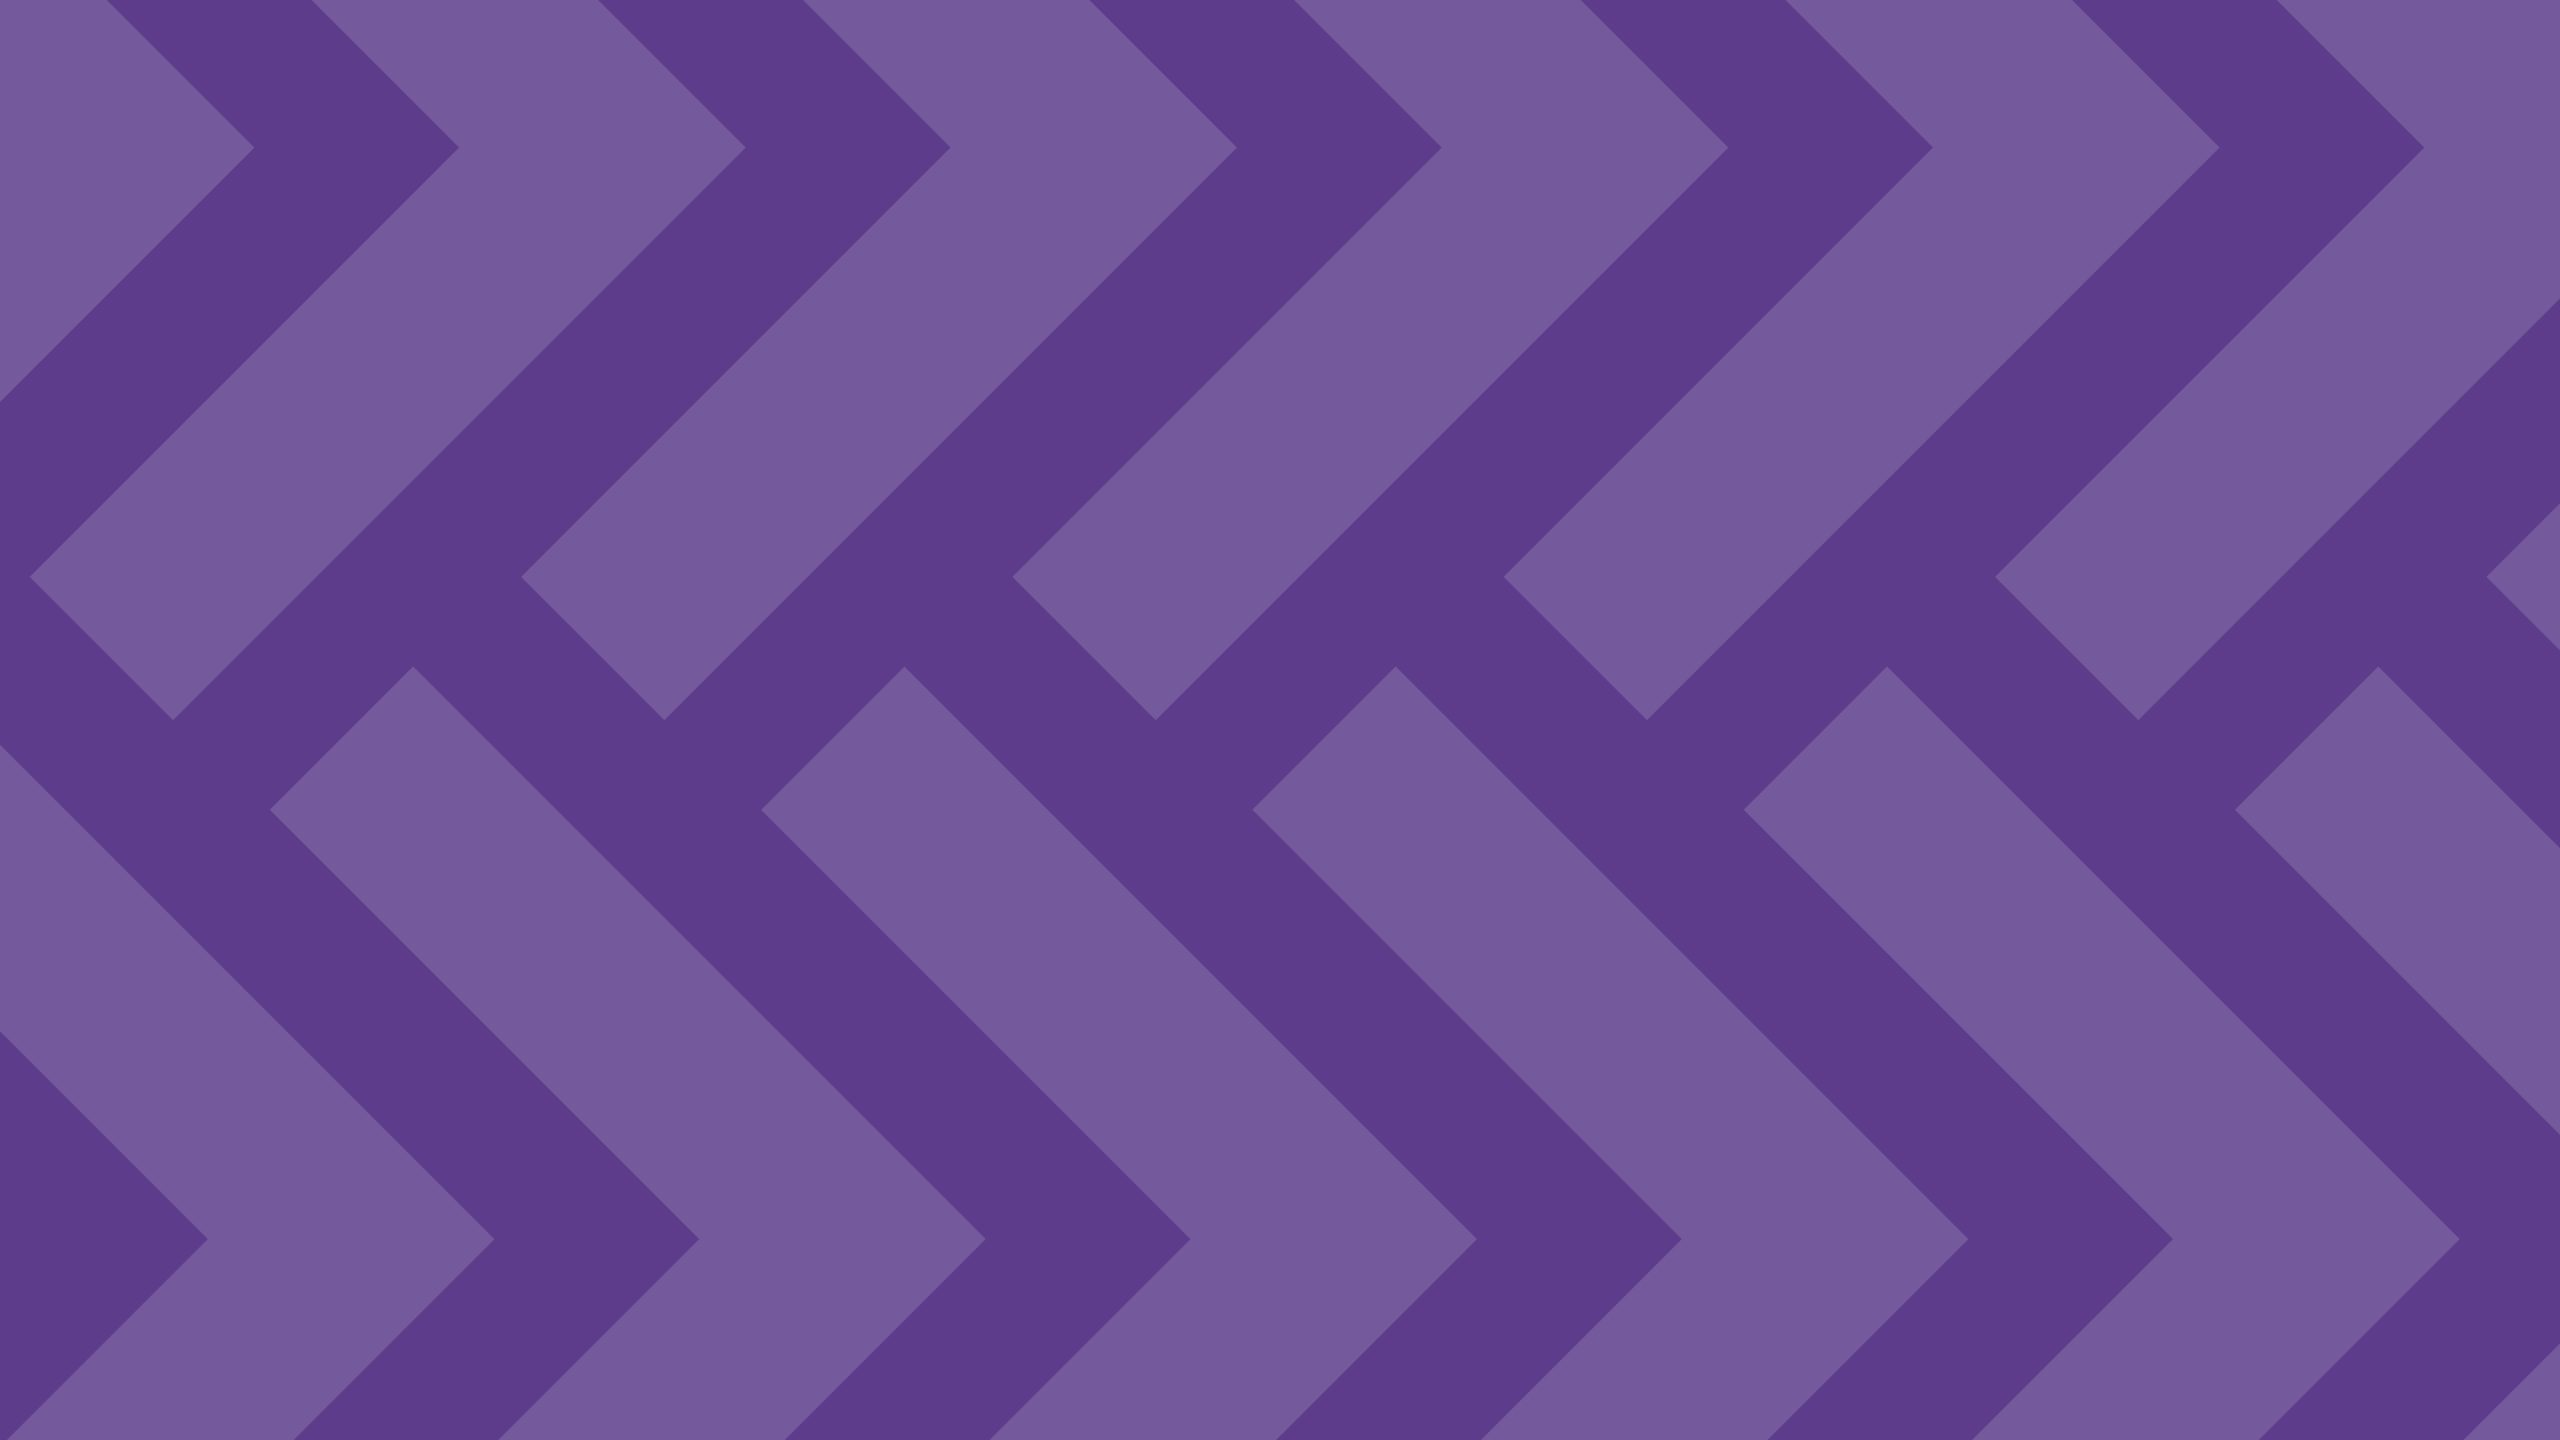 image of nacro chevron pattern purple